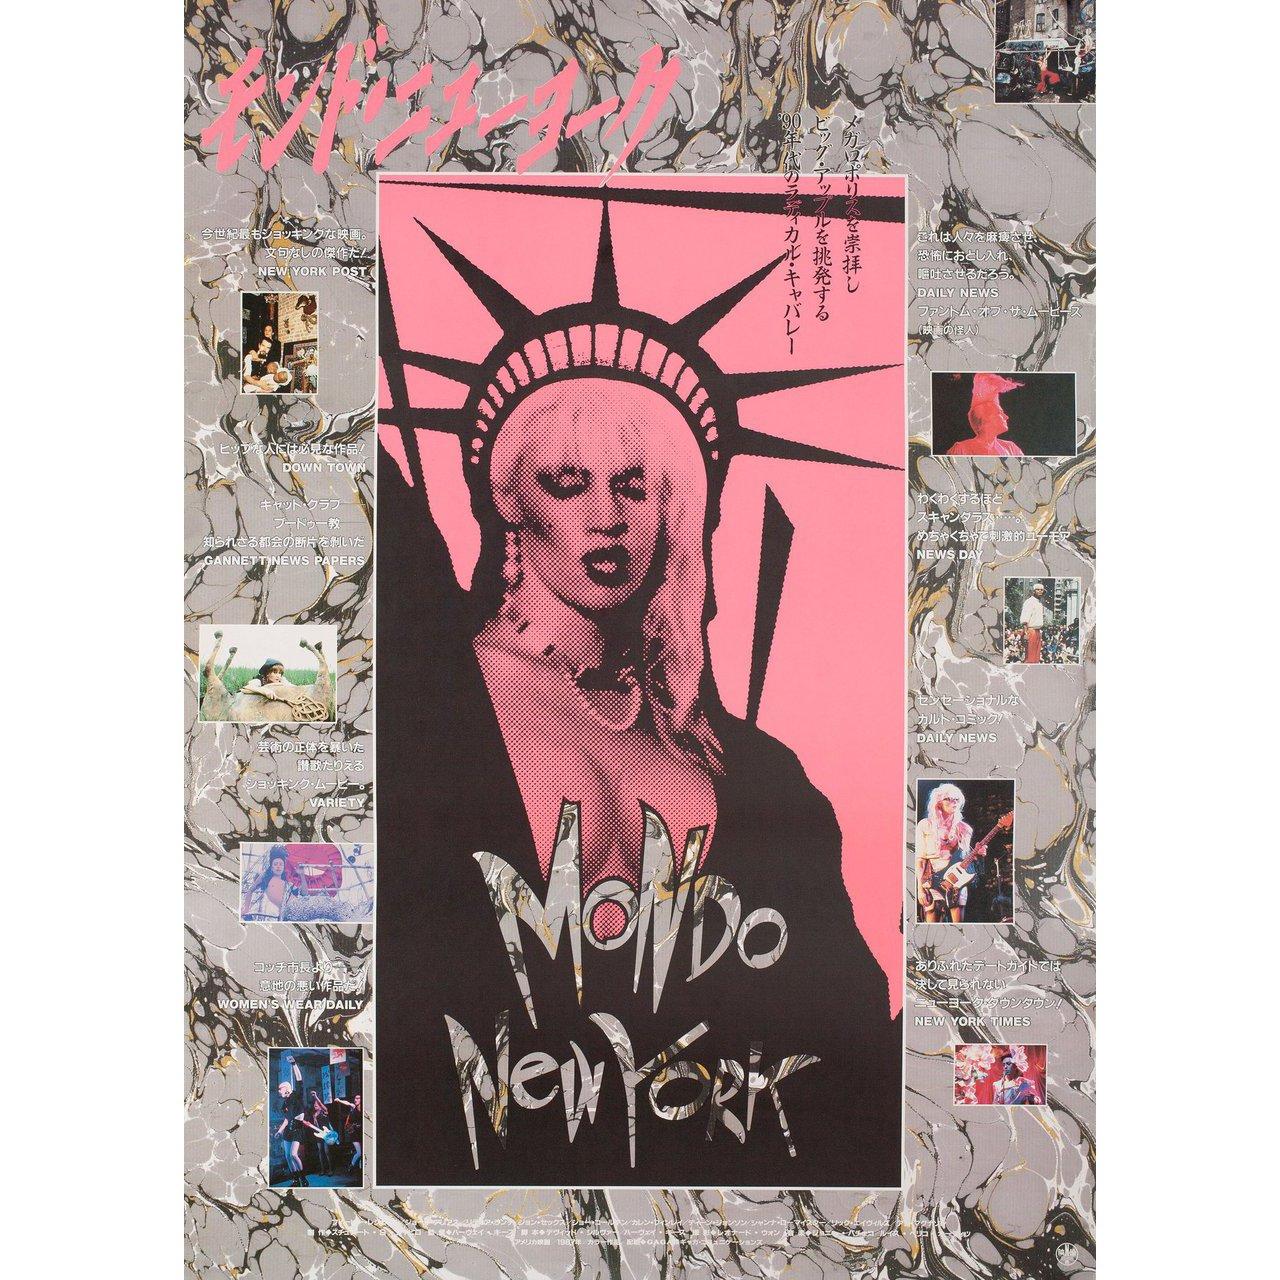 Late 20th Century Mondo New York 1988 Japanese B2 Film Poster